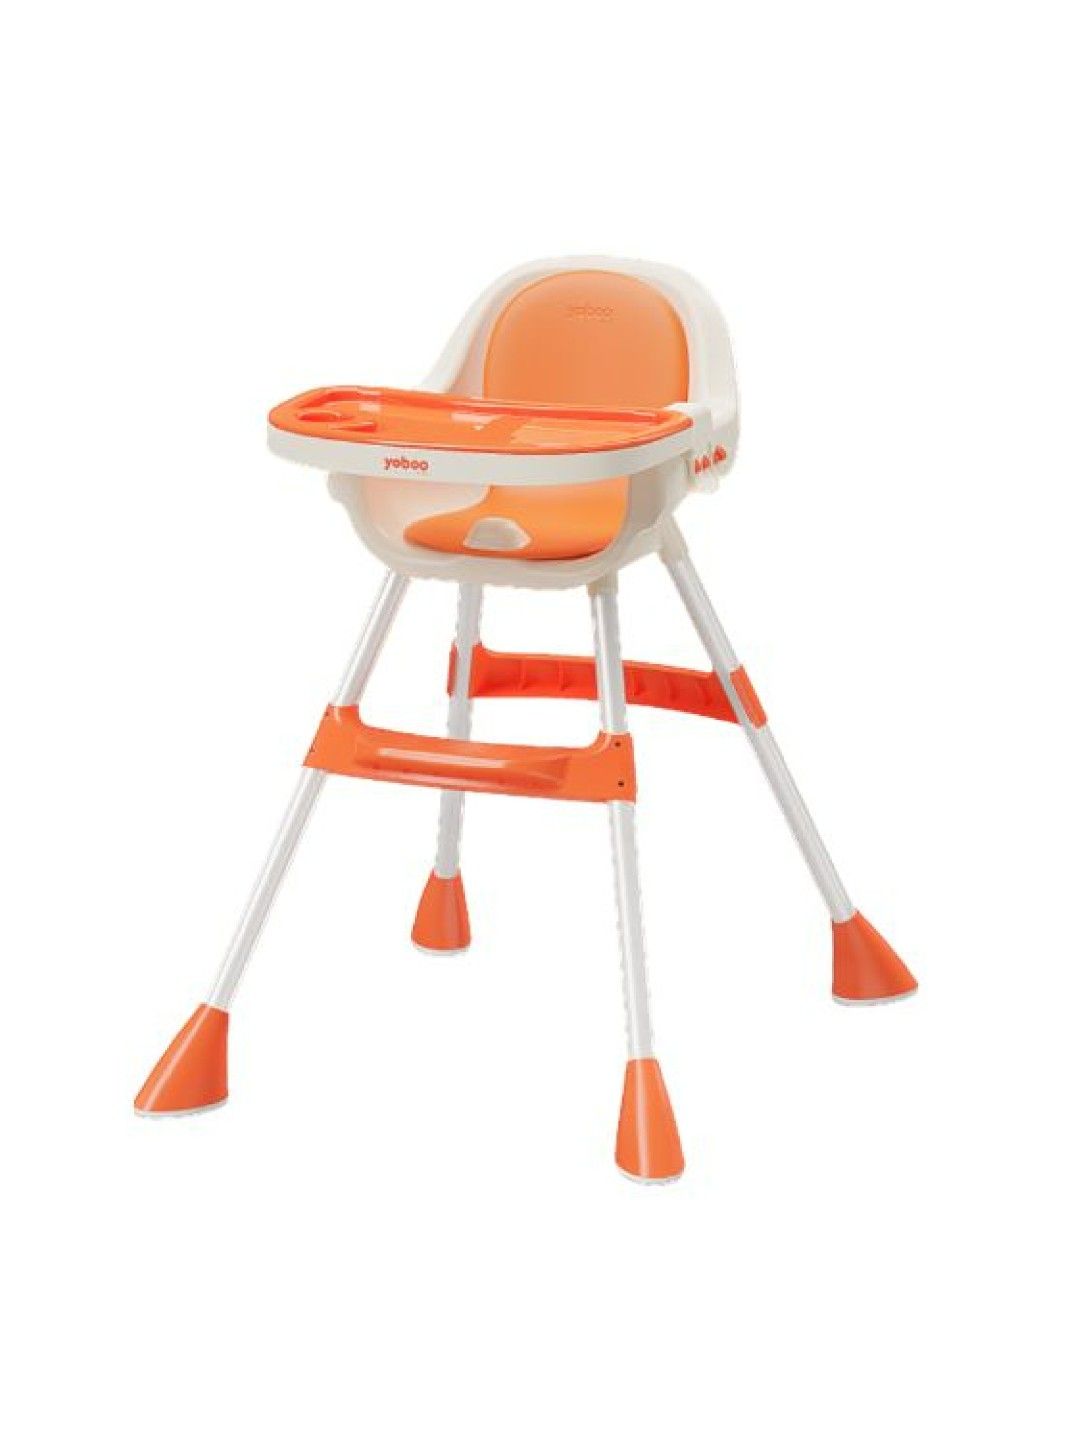 Yoboo Baby High Chair - Light